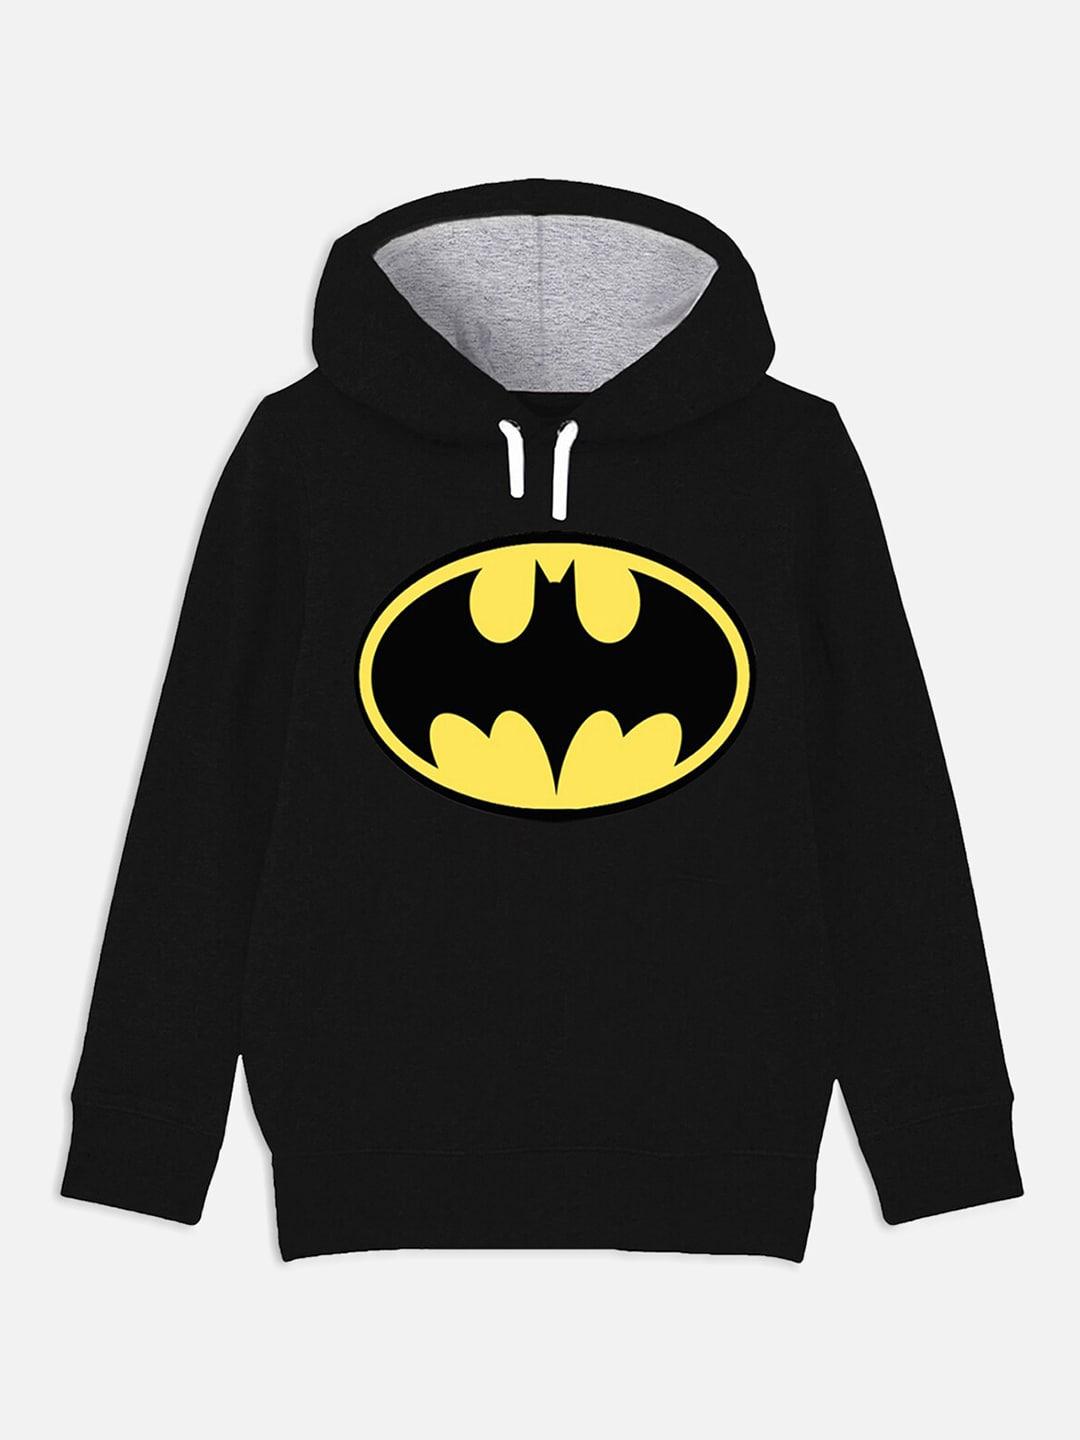 yk justice league boys batman printed hooded cotton sweatshirt